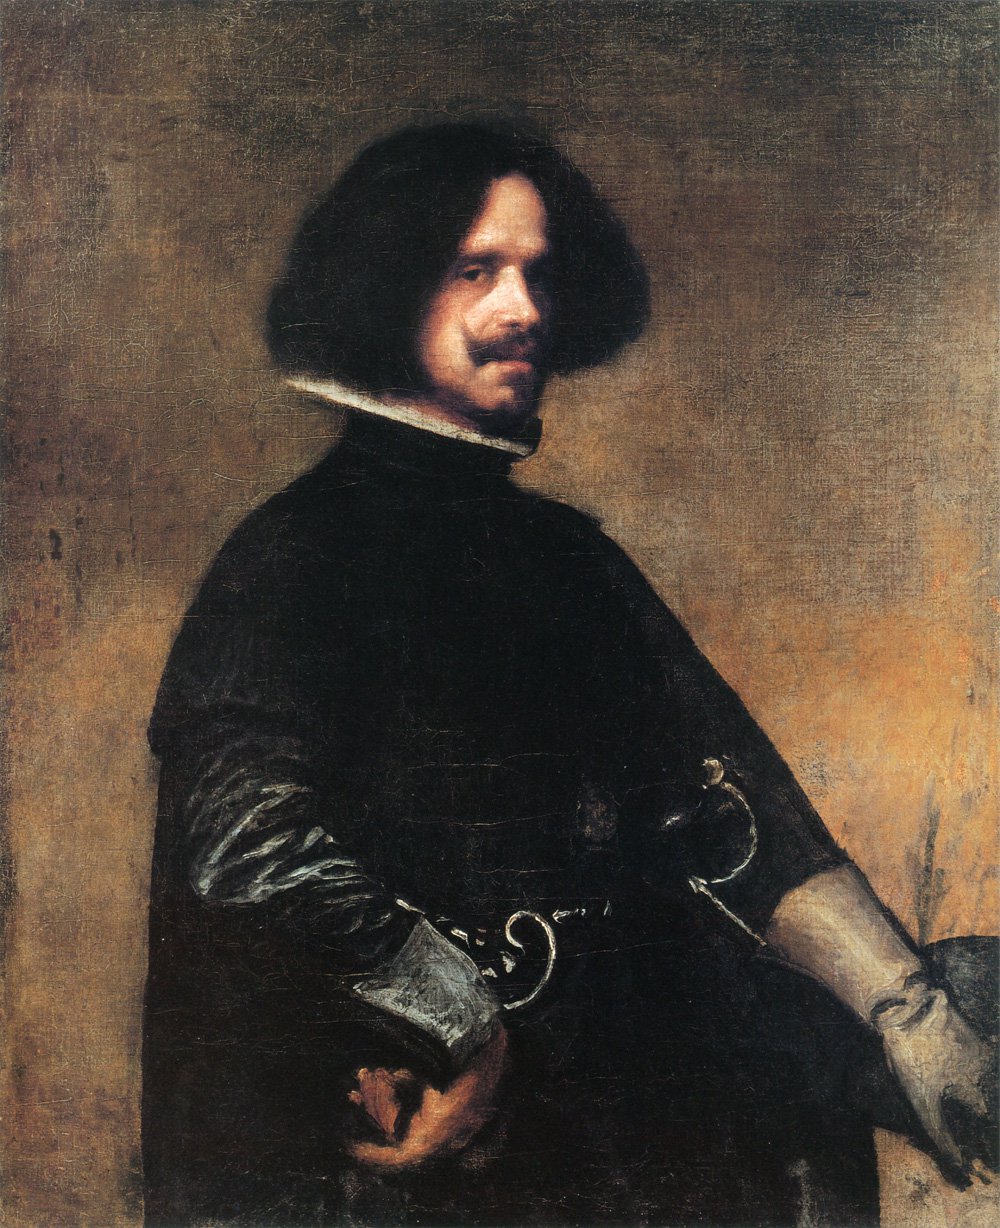 Диего Веласкес. "Автопортрет". 1645. Холст, масло. Courtesy of Uffizi Gallery, Florence, Italy